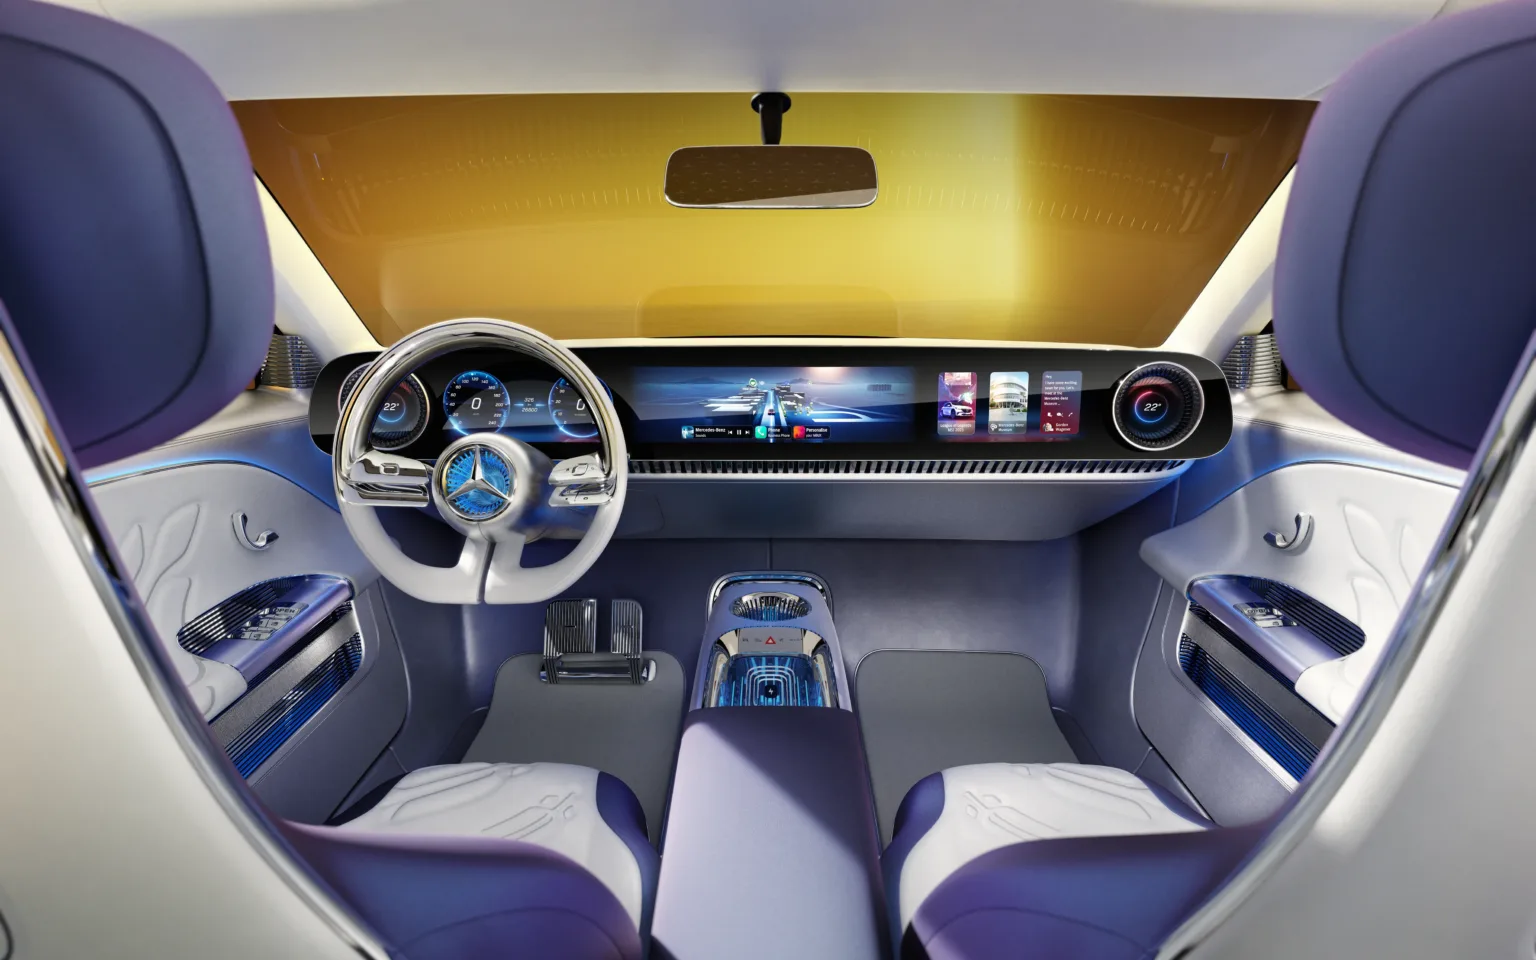 Mercedes-Benz Concept CLA Class Interior Image 5